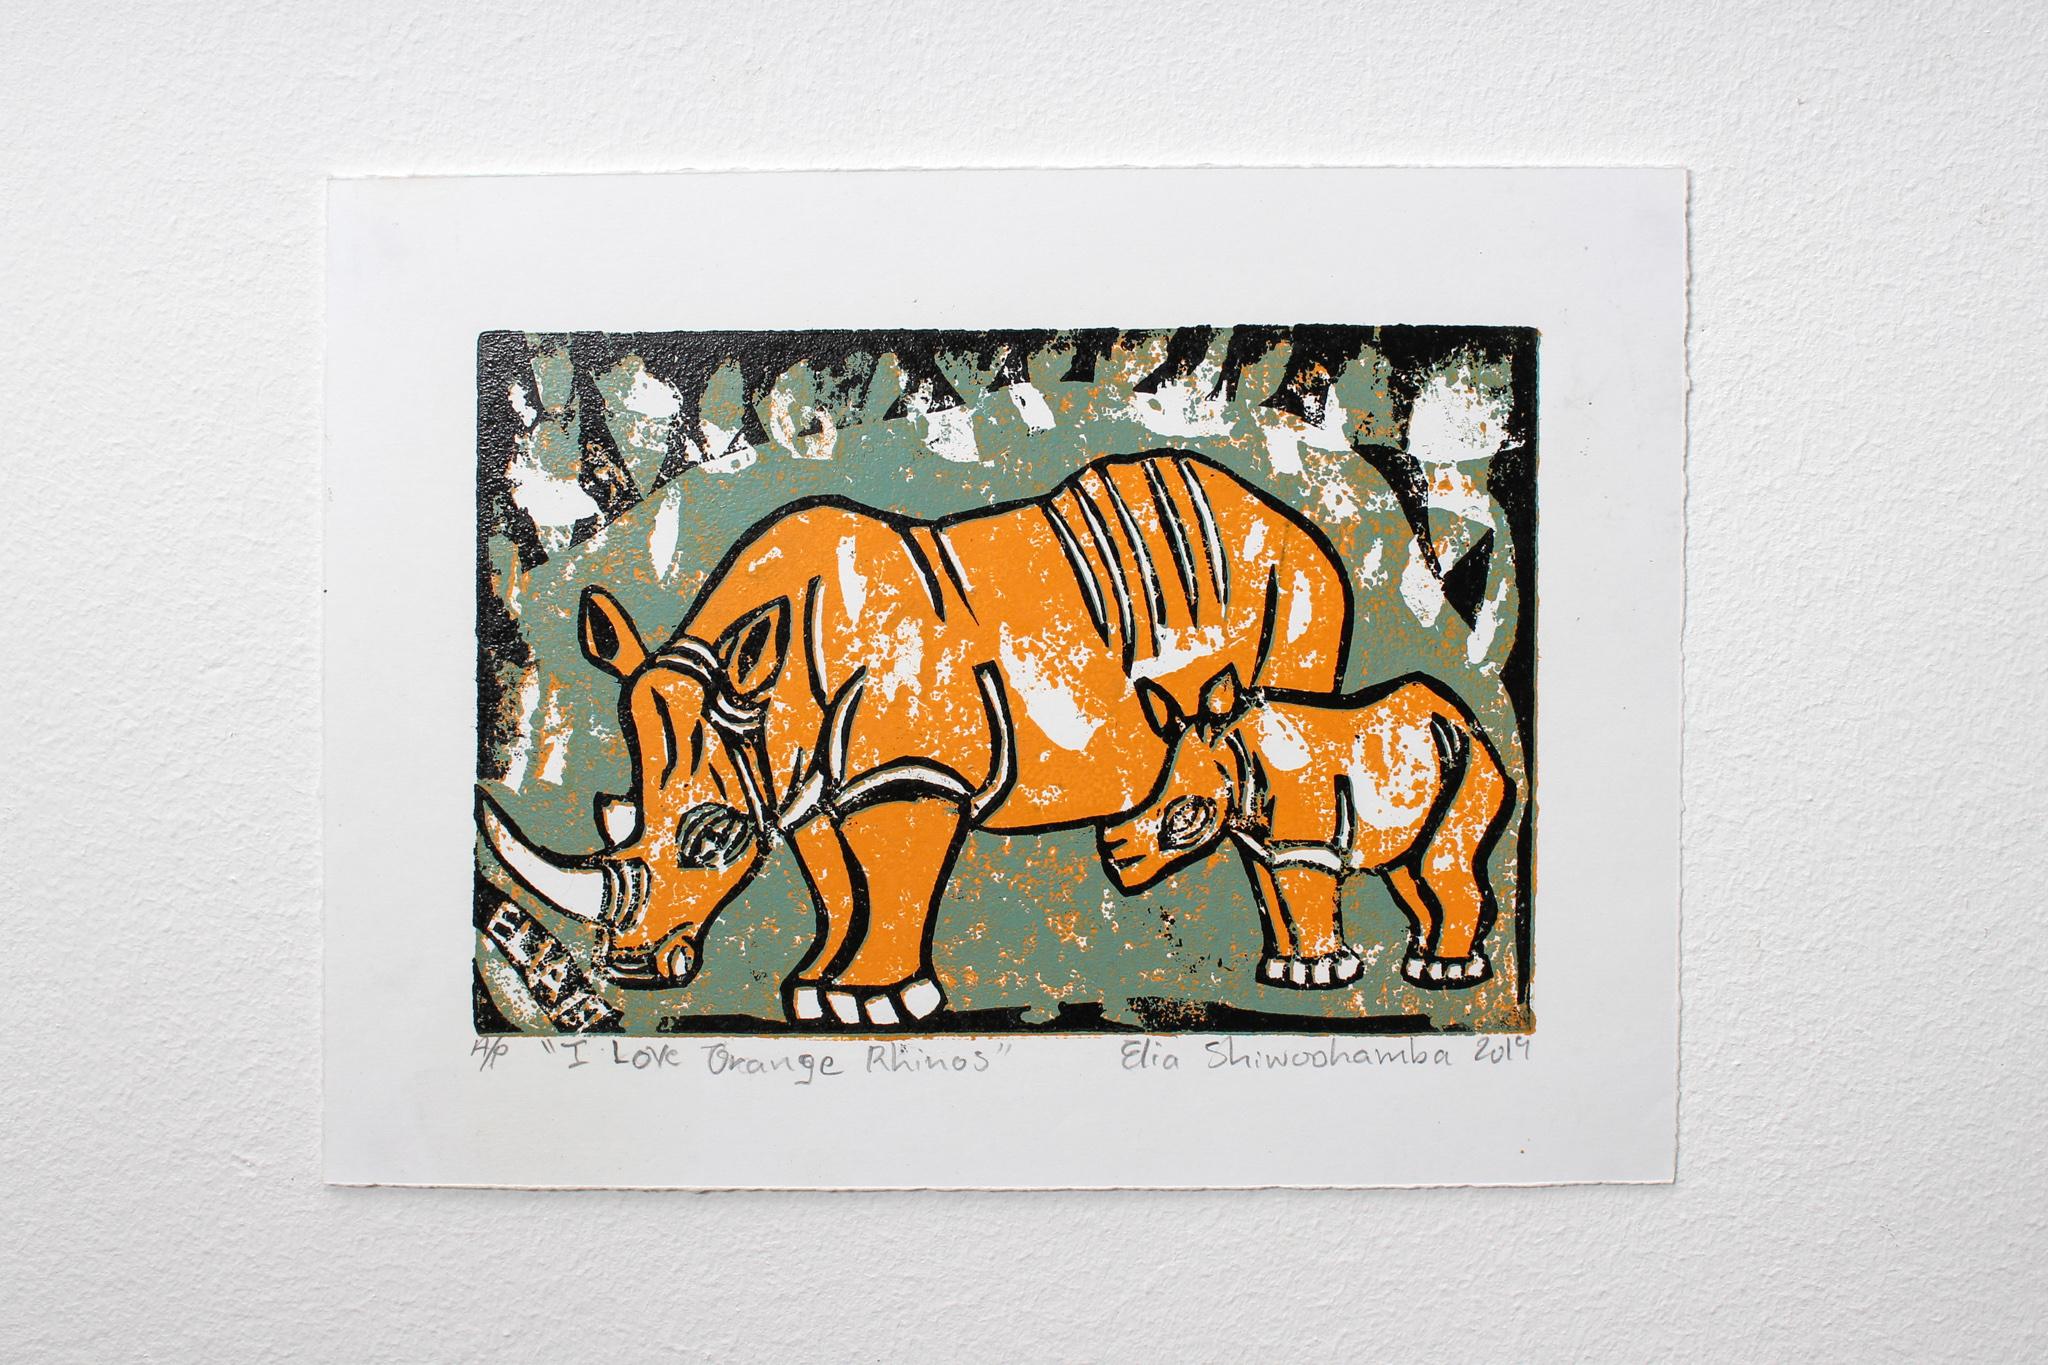 I love orange rhino, Elia Shiwoohamba, Cardboard block print on paper